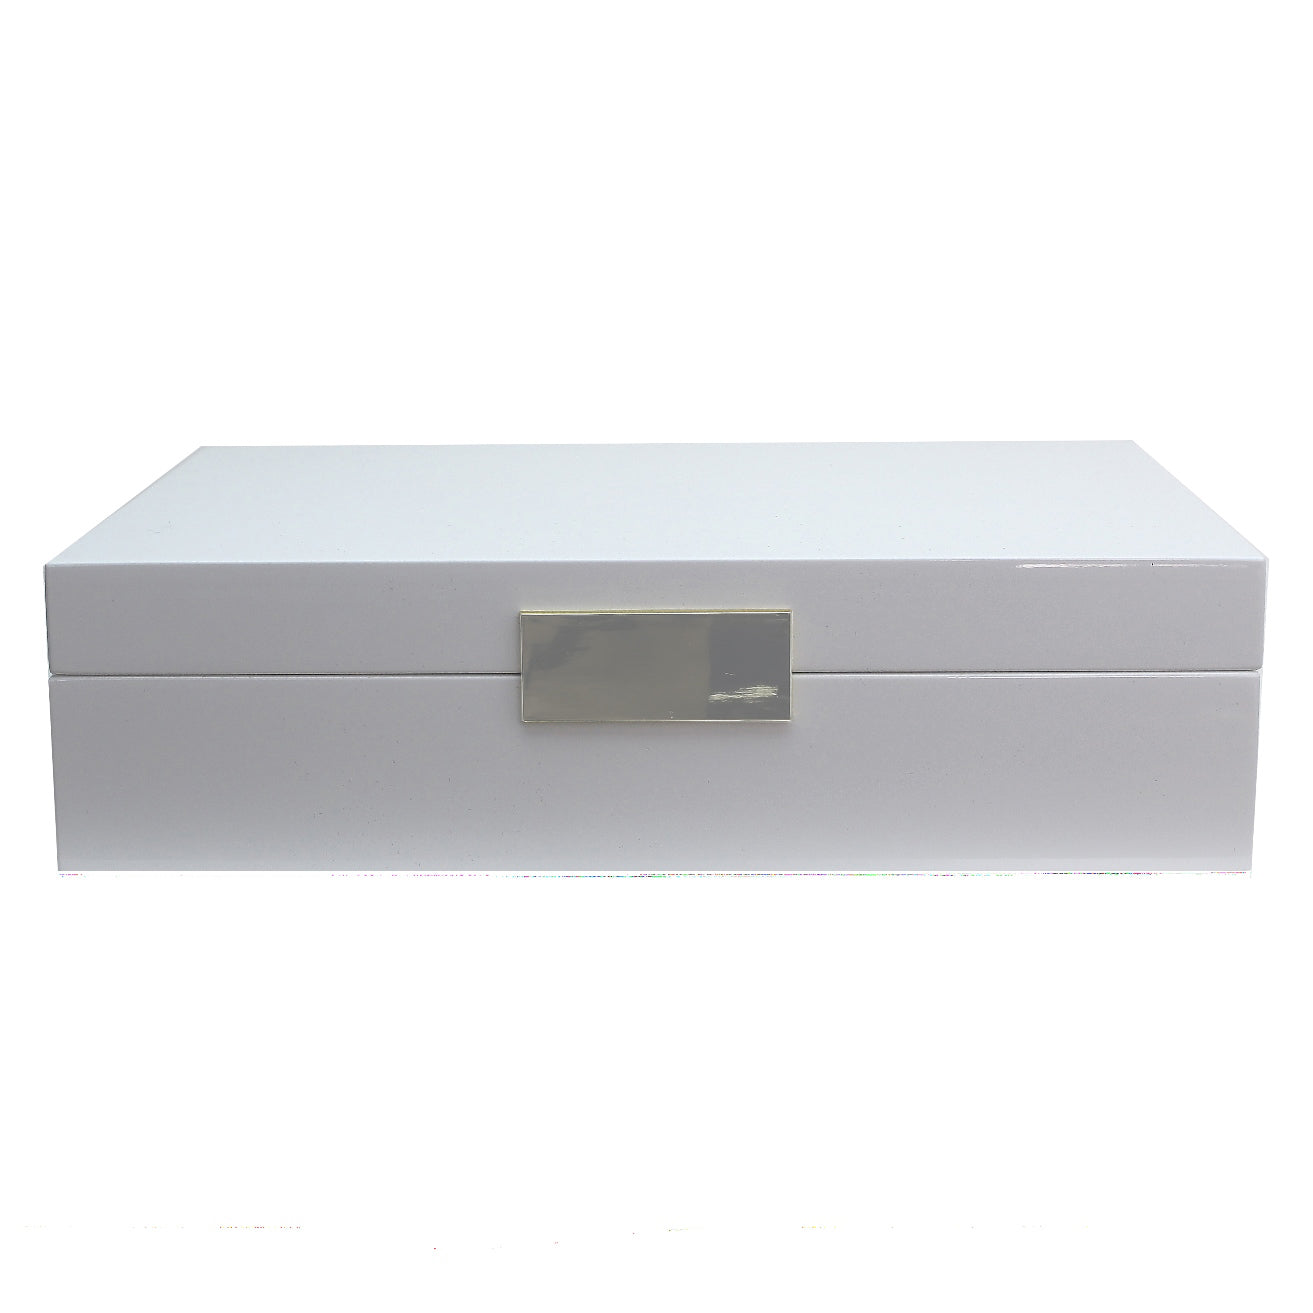 8x11 Jewellery Box White & Silver